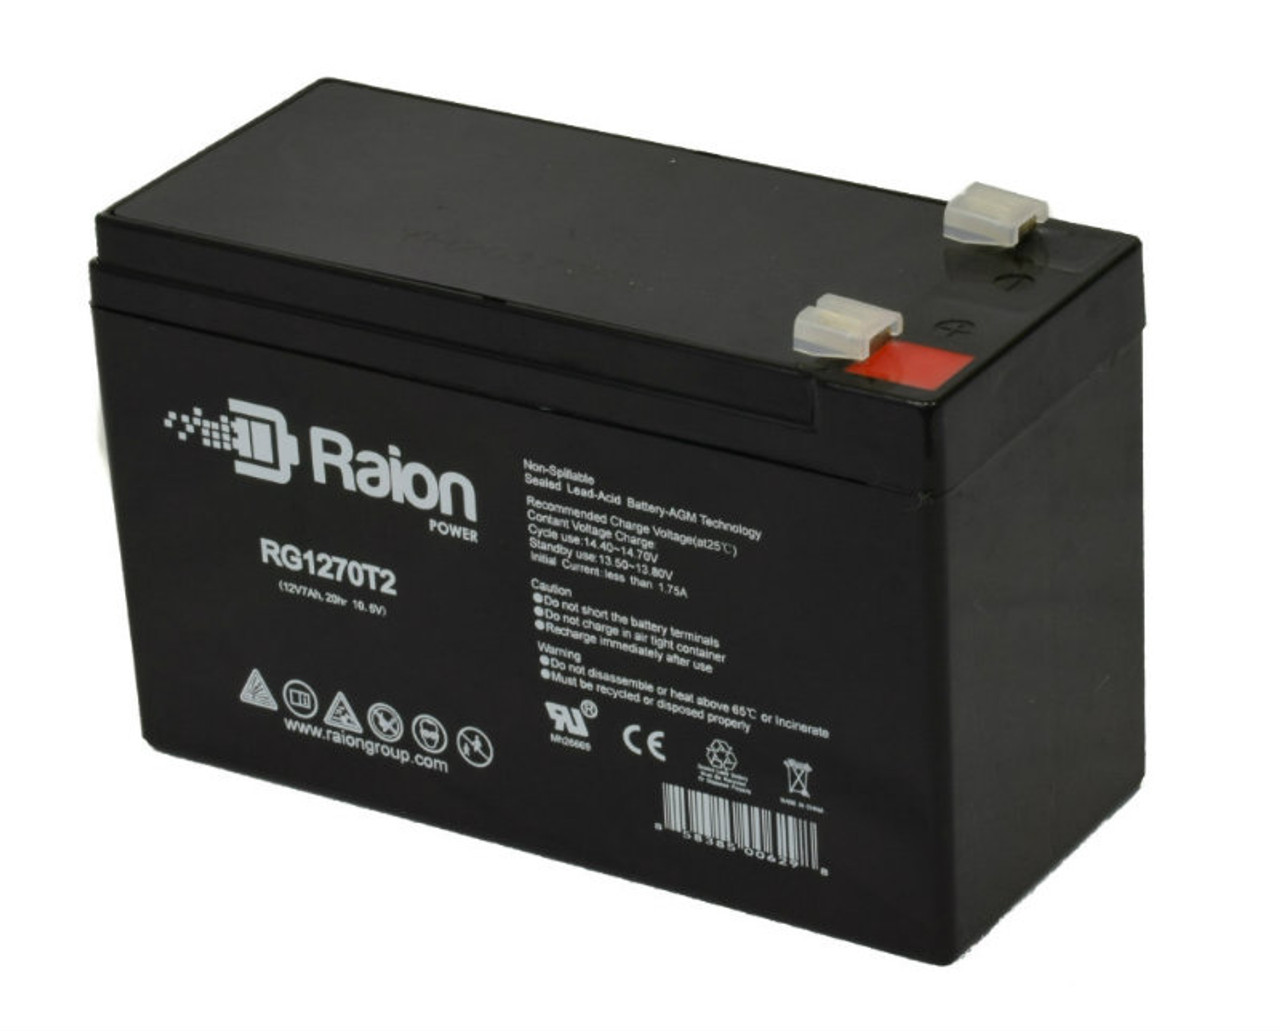 Raion Power RG1270T2 12V 7Ah Rechargeable Battery for BPOWER BPE 7.2-12